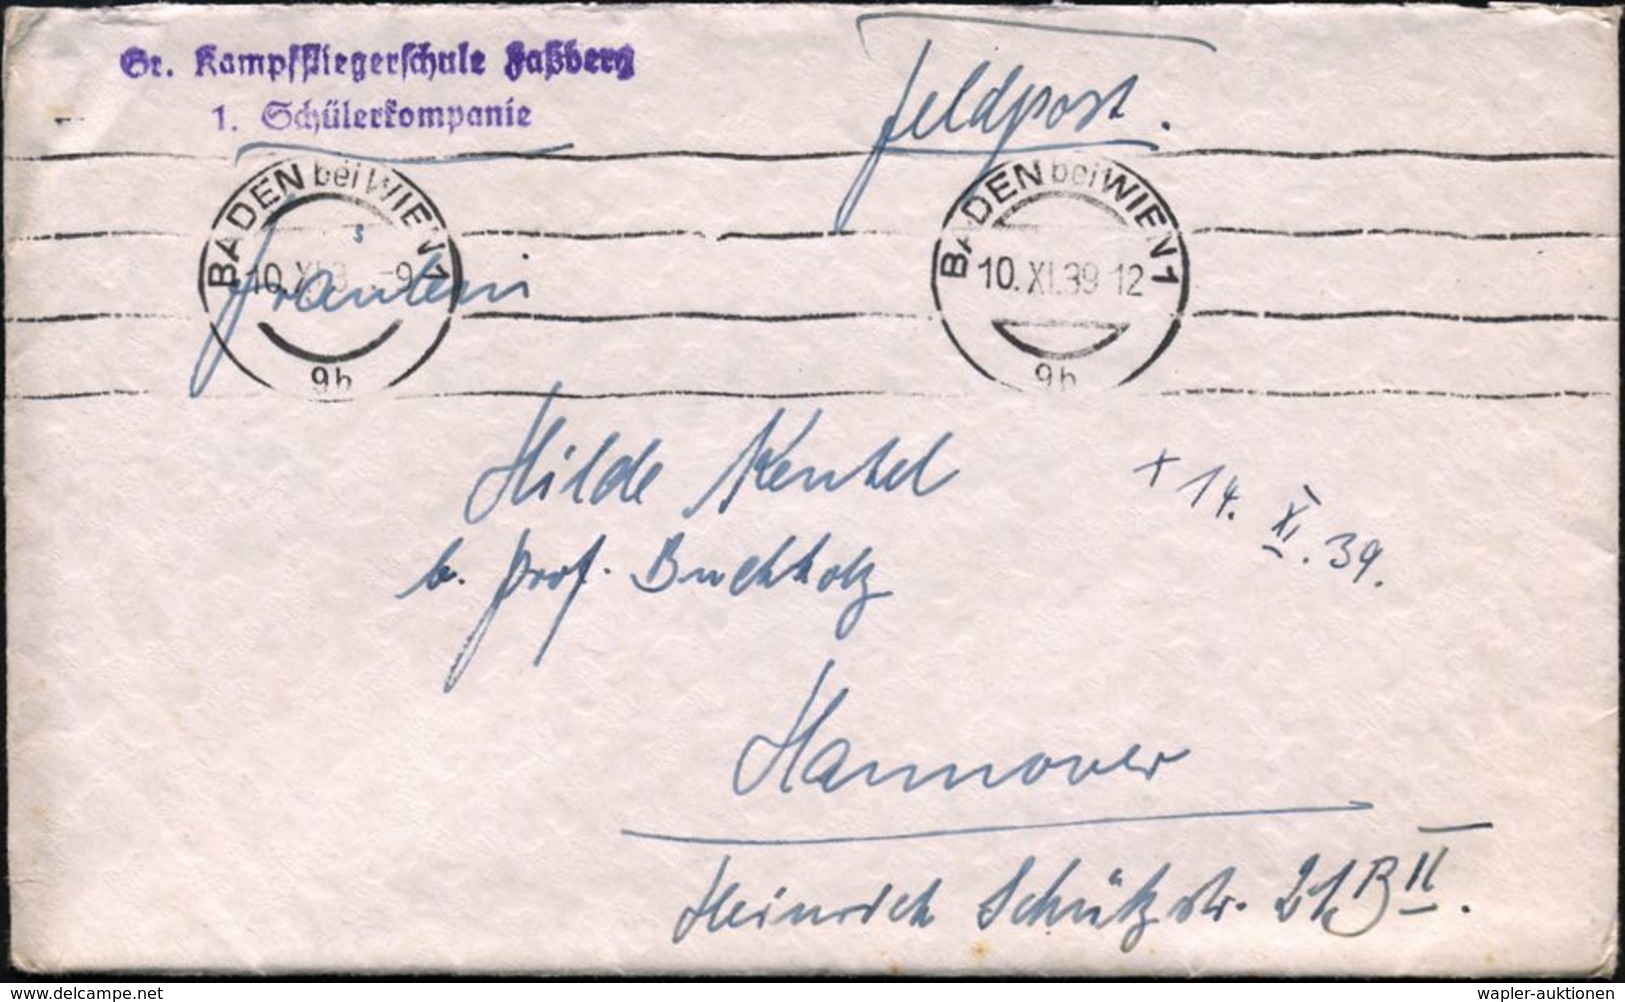 BADEN Bei WIEN 1/ 9b 1939 (10.11.) Aptierter, Ehem. österr. Bd.MaSt (4 Wellen) + Viol. 2L: Gr. Kampffliegerschule Faßber - Avions